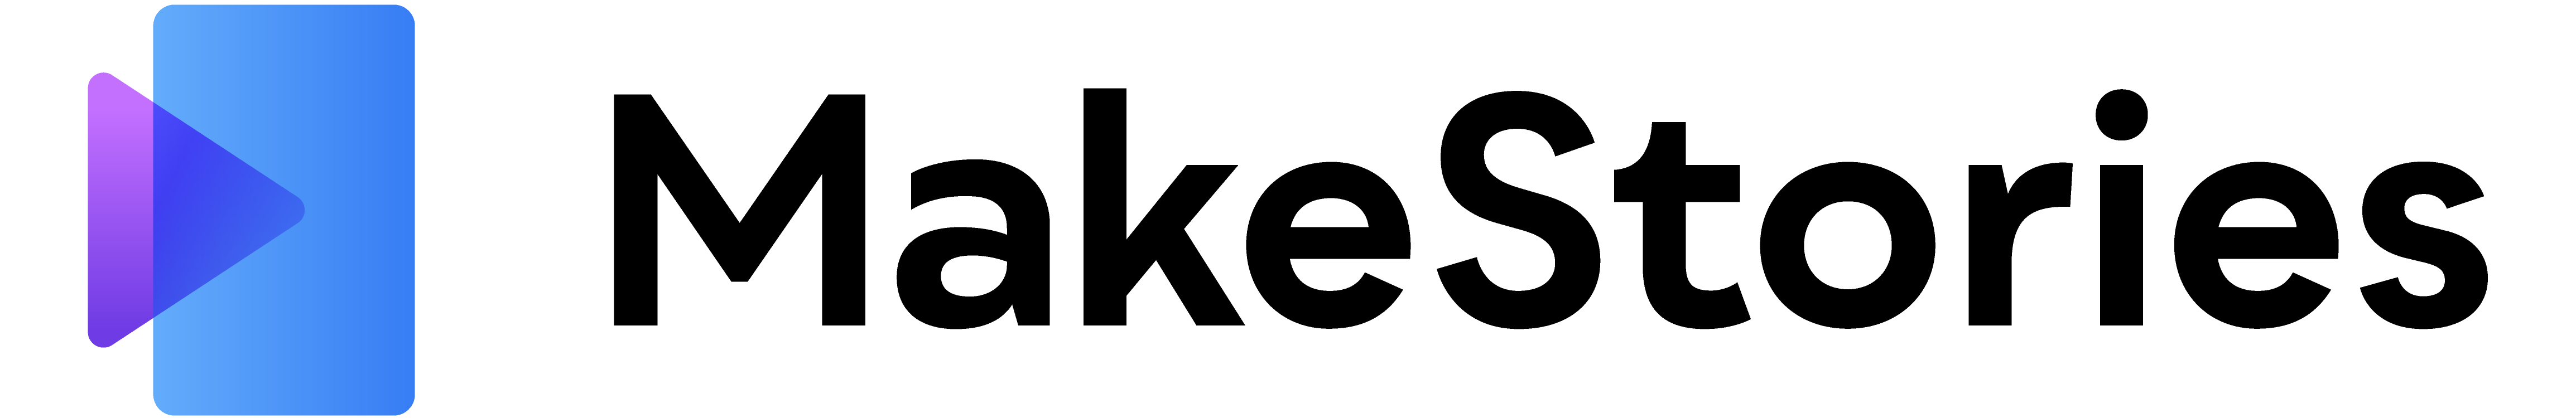 MakeStories Logo